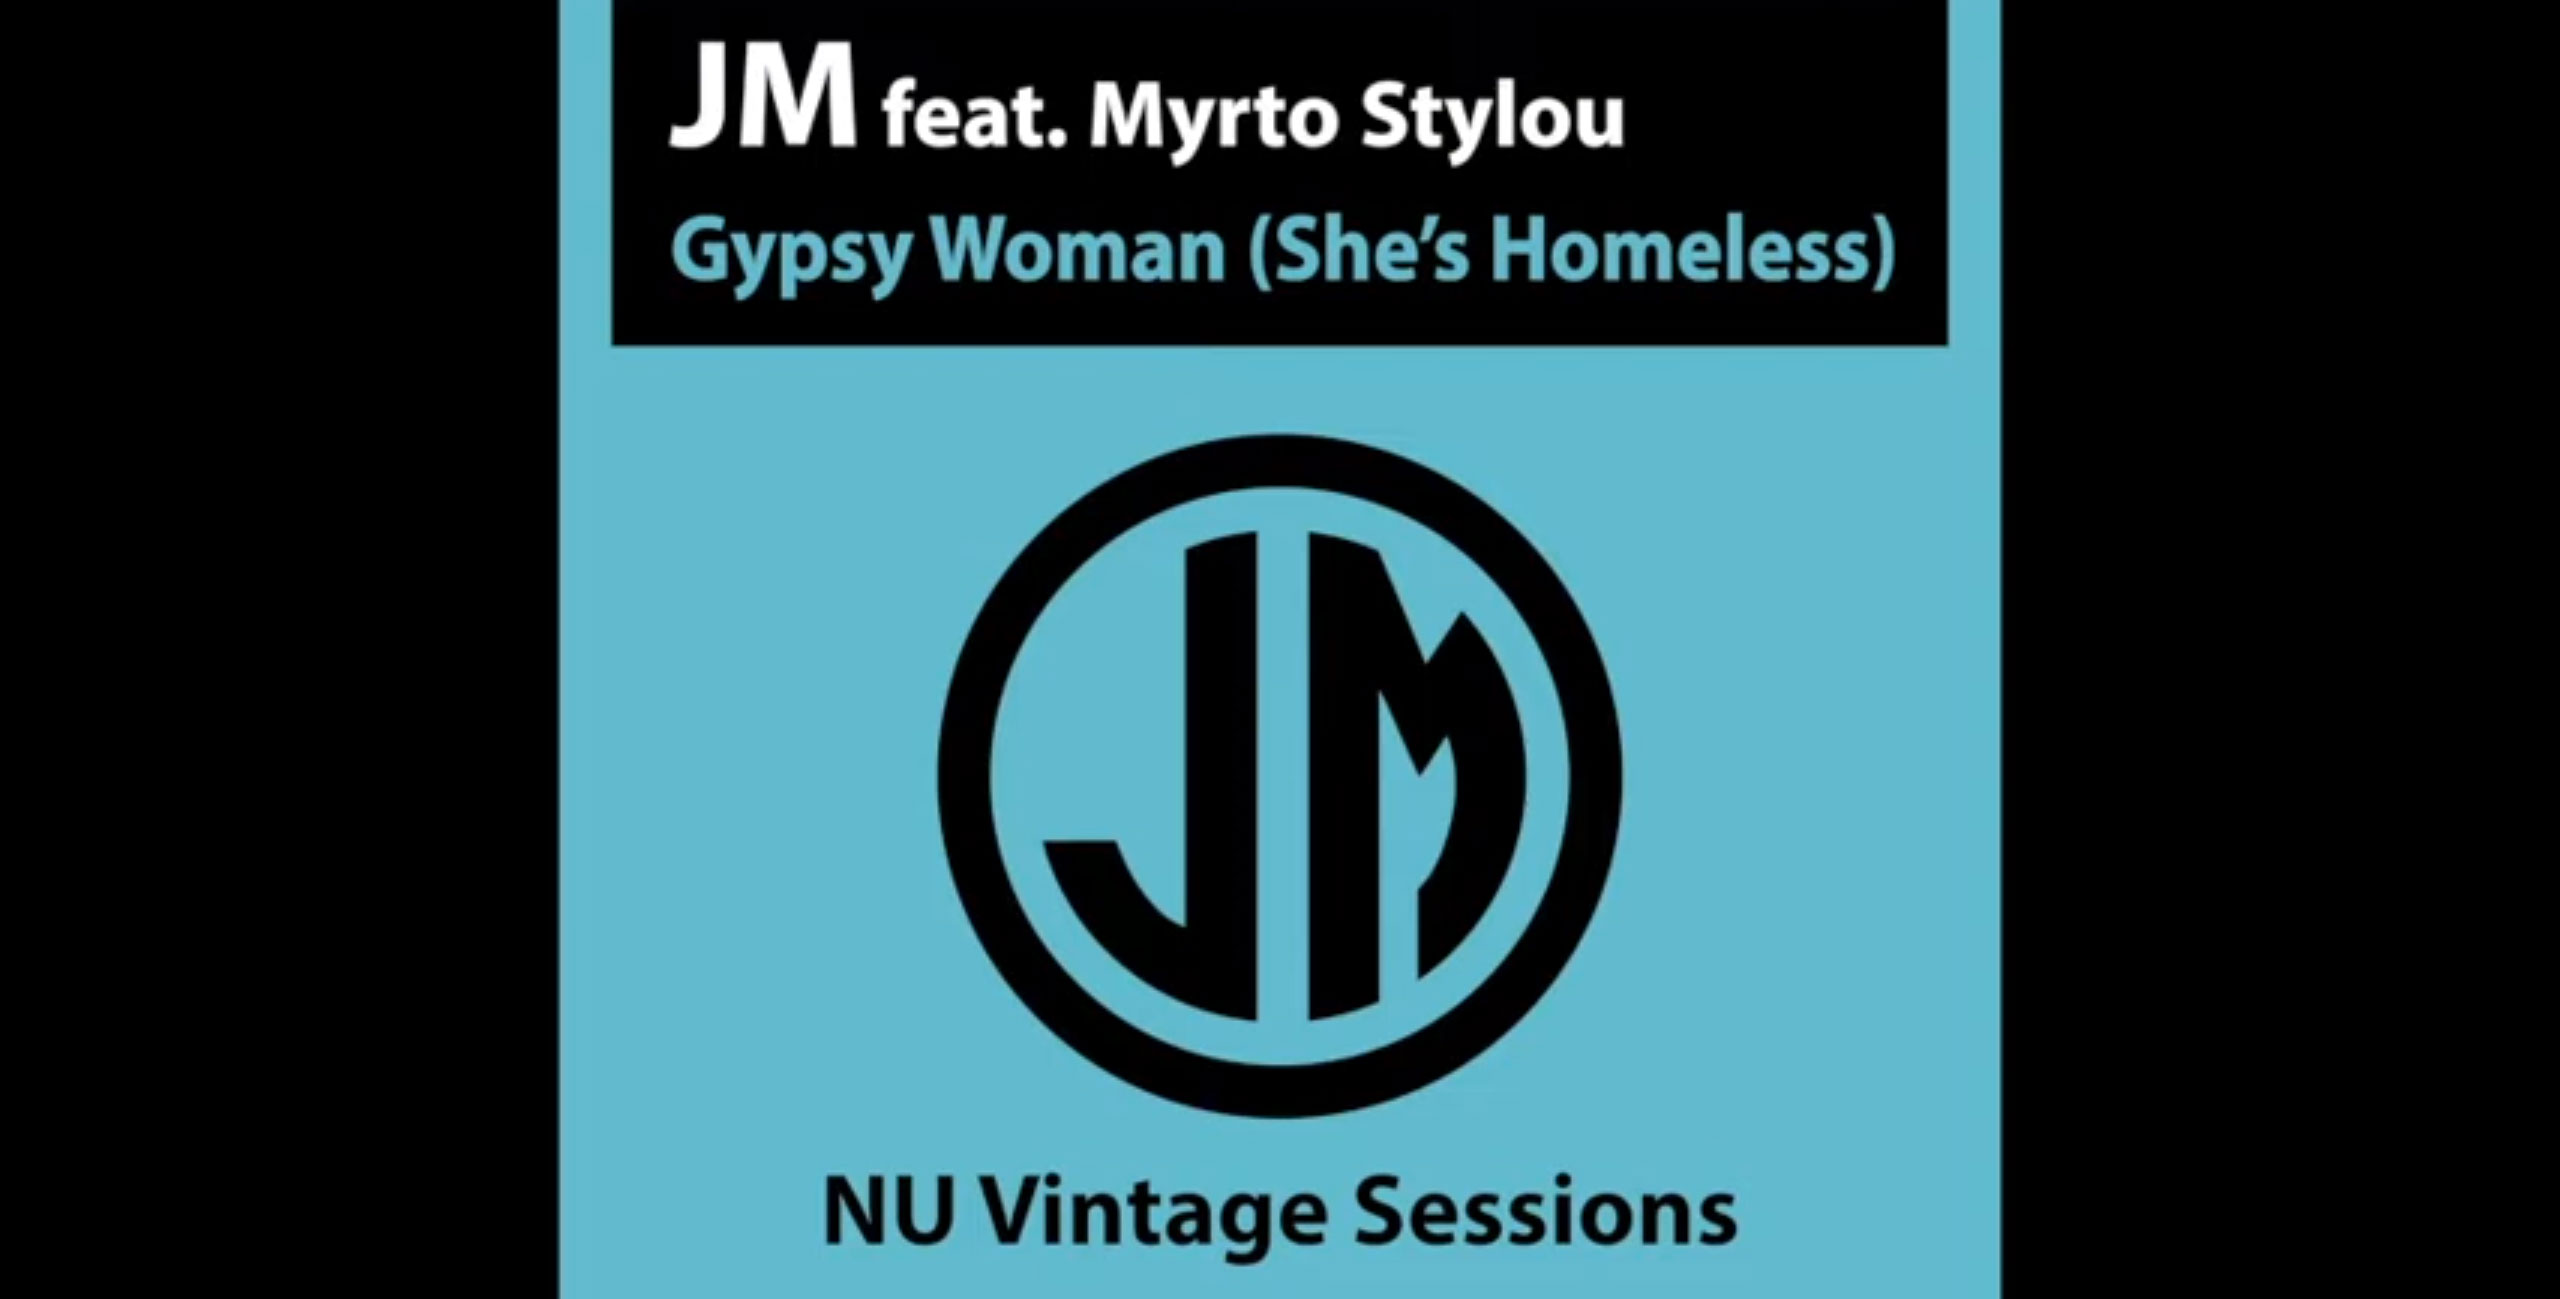 JM NU Vintage Sessions feat. Myrto Stylou - Gypsy Woman (She's Homeless)